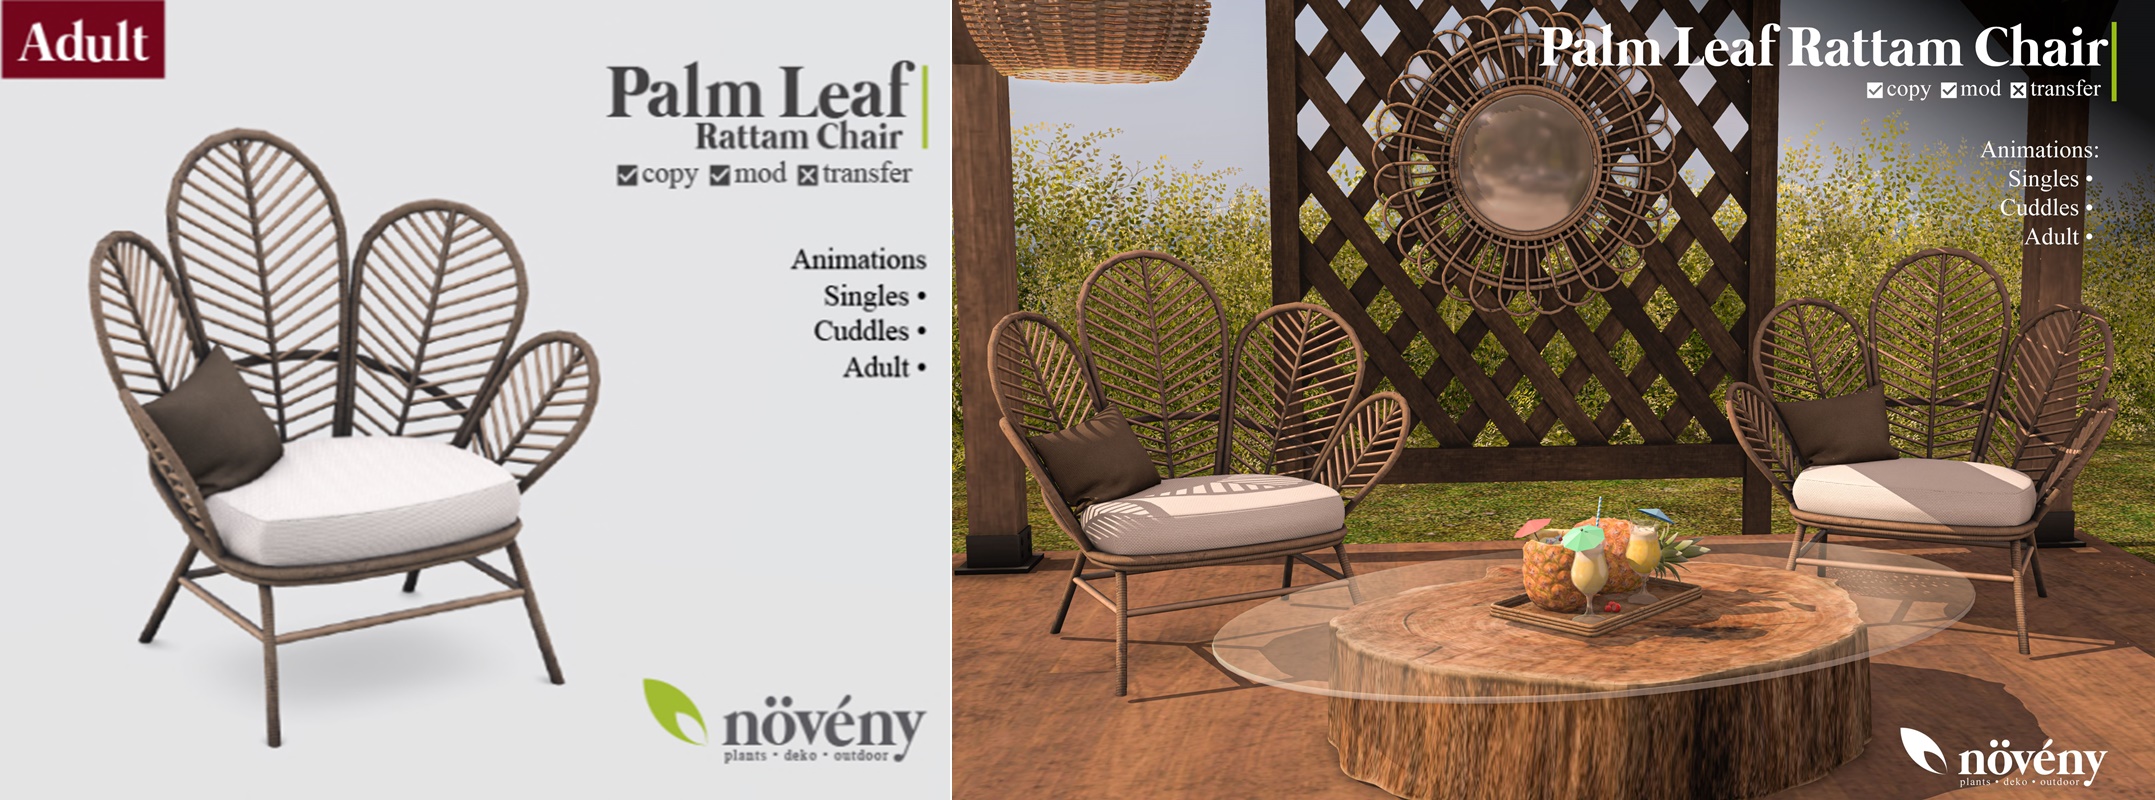 Noveny – Palm Leaf Rattam Chair